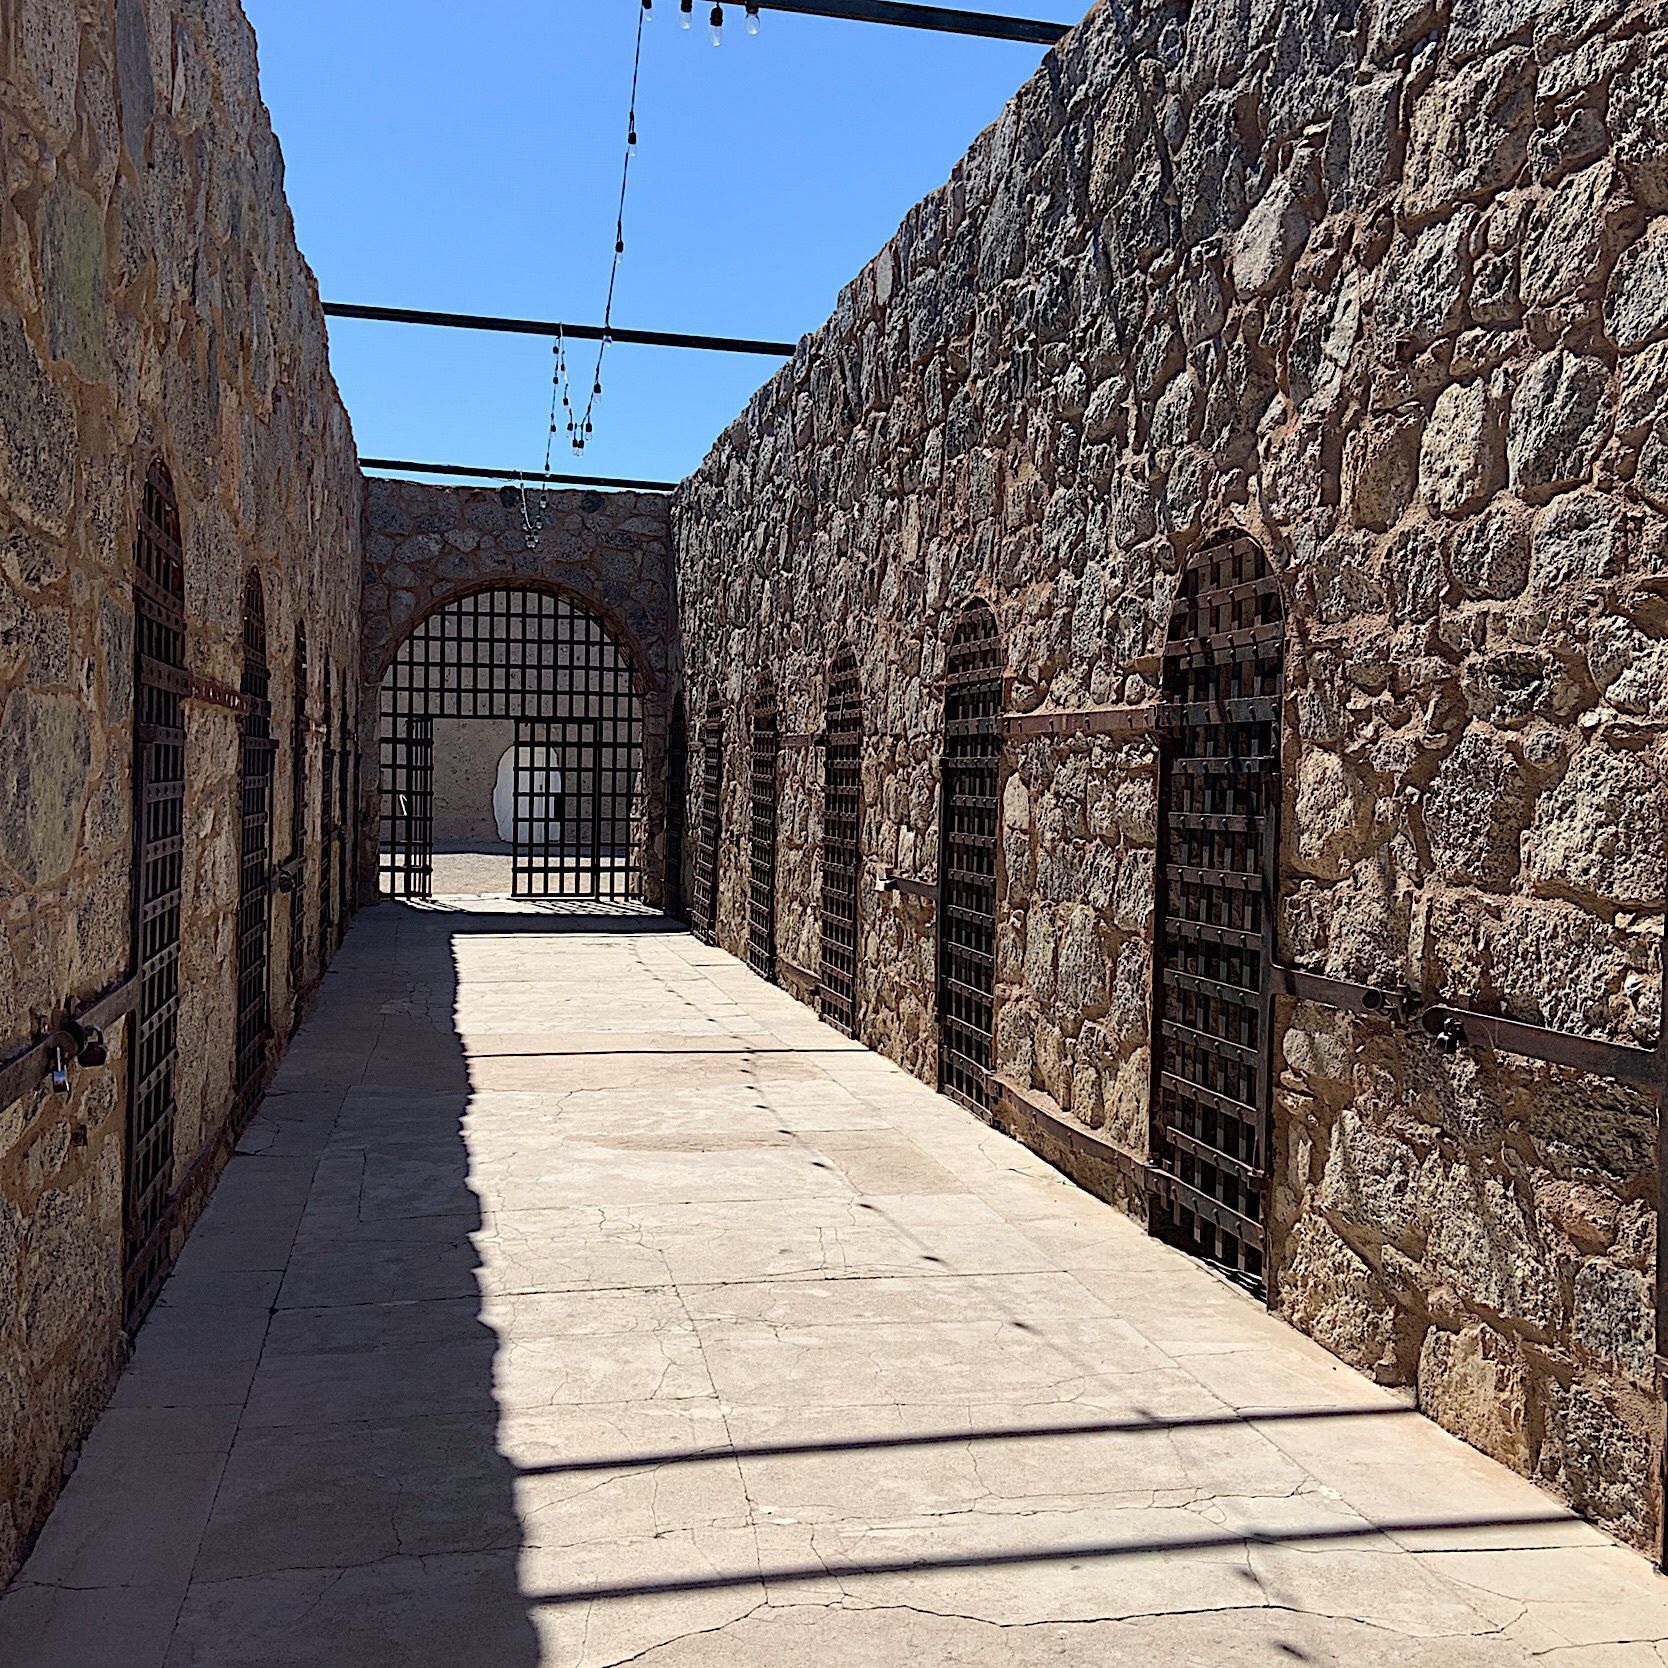 Prison Cells at the Yuma Territorial Prison State Park